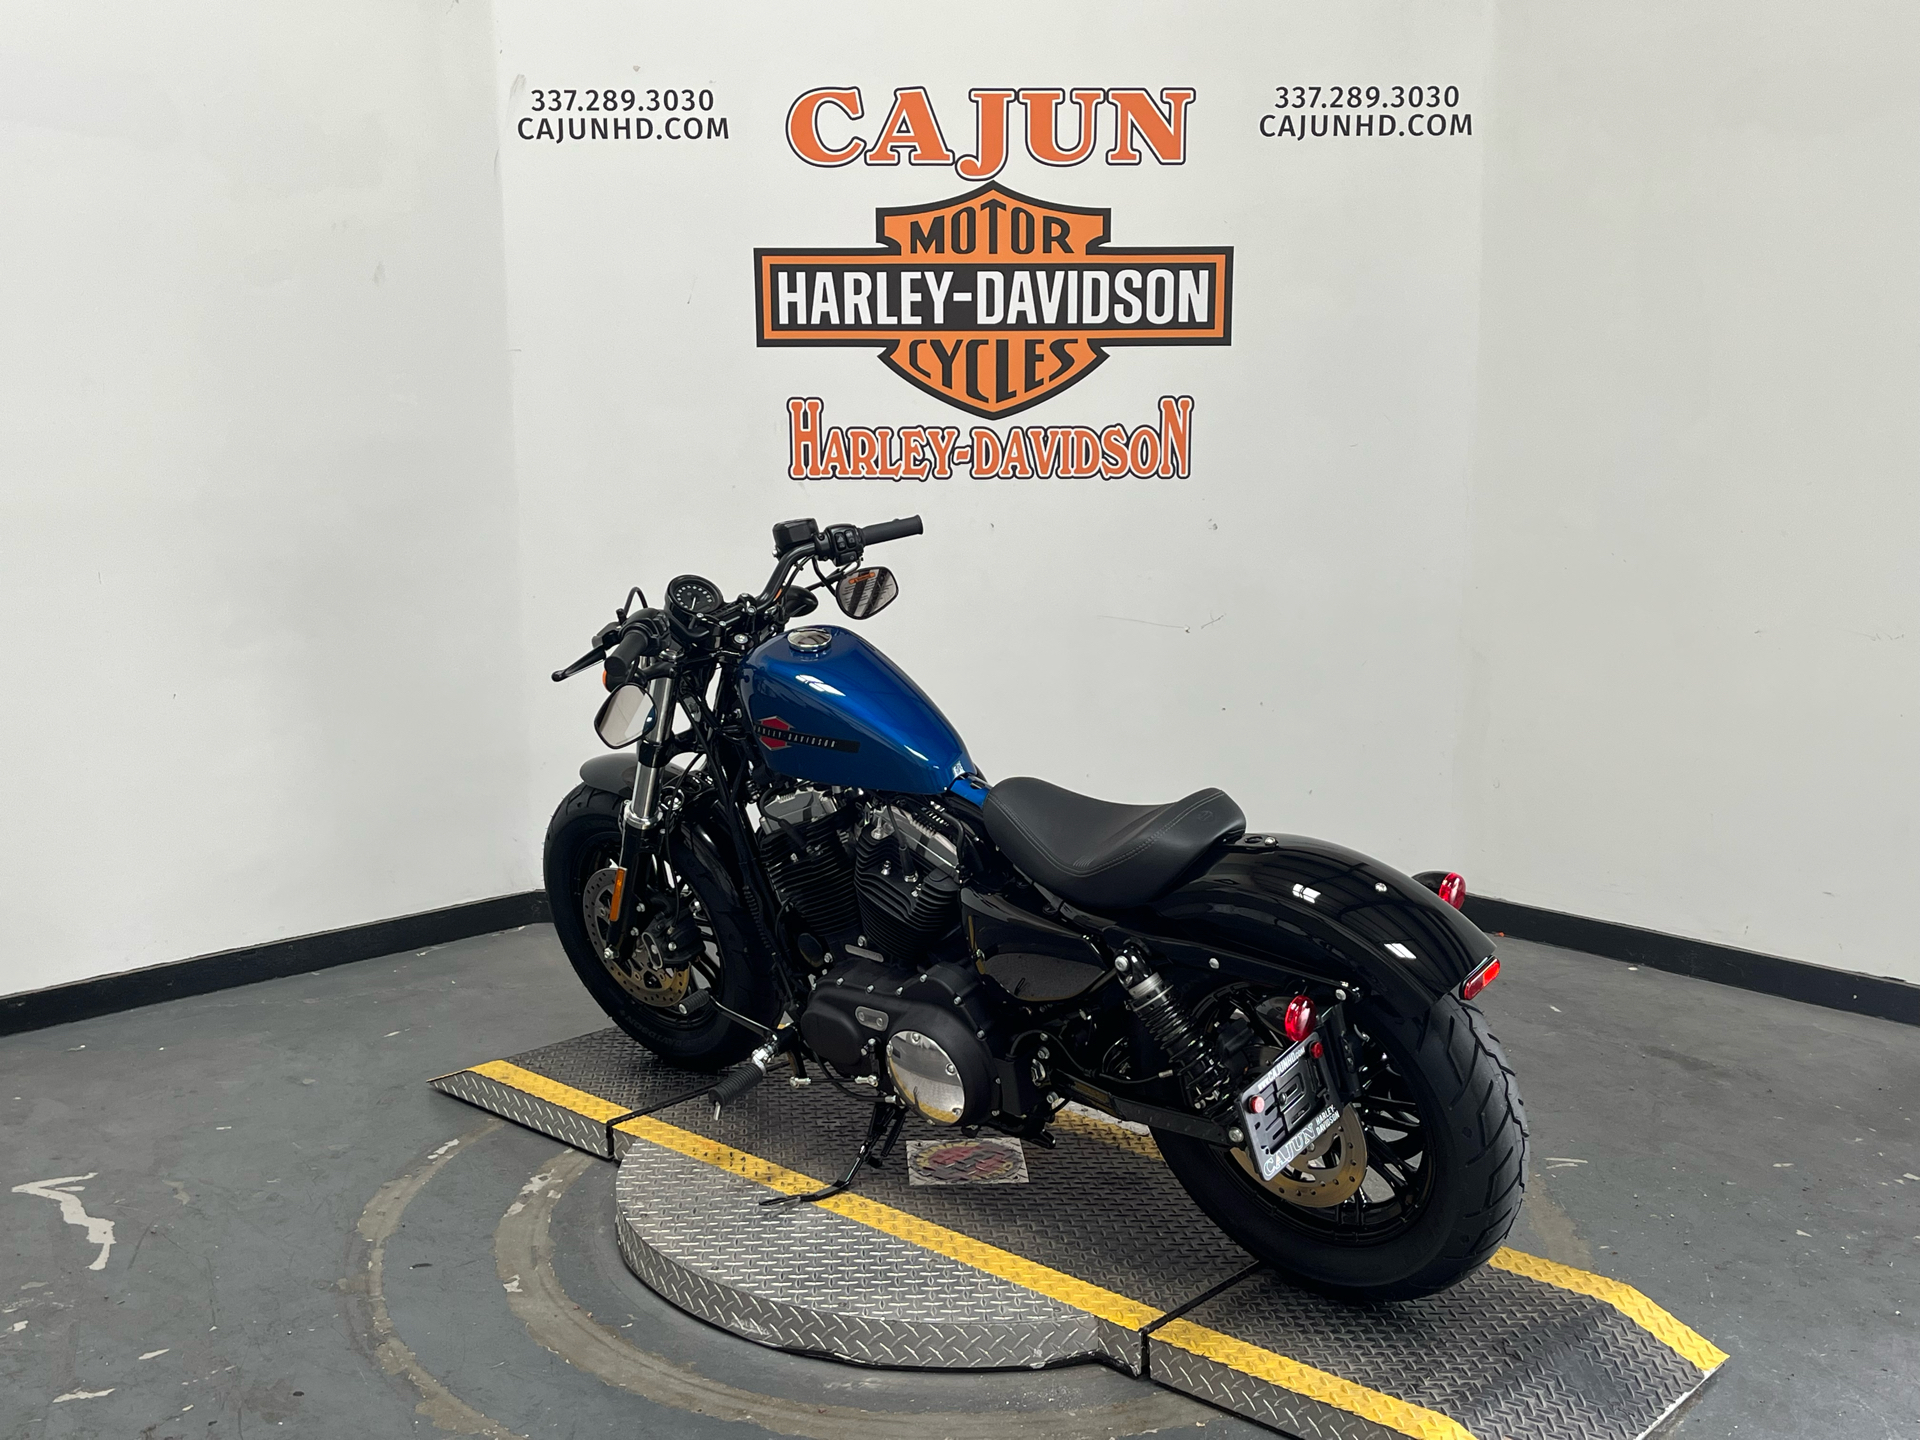 2022 Harley-Davidson Forty-Eight near me - Photo 5